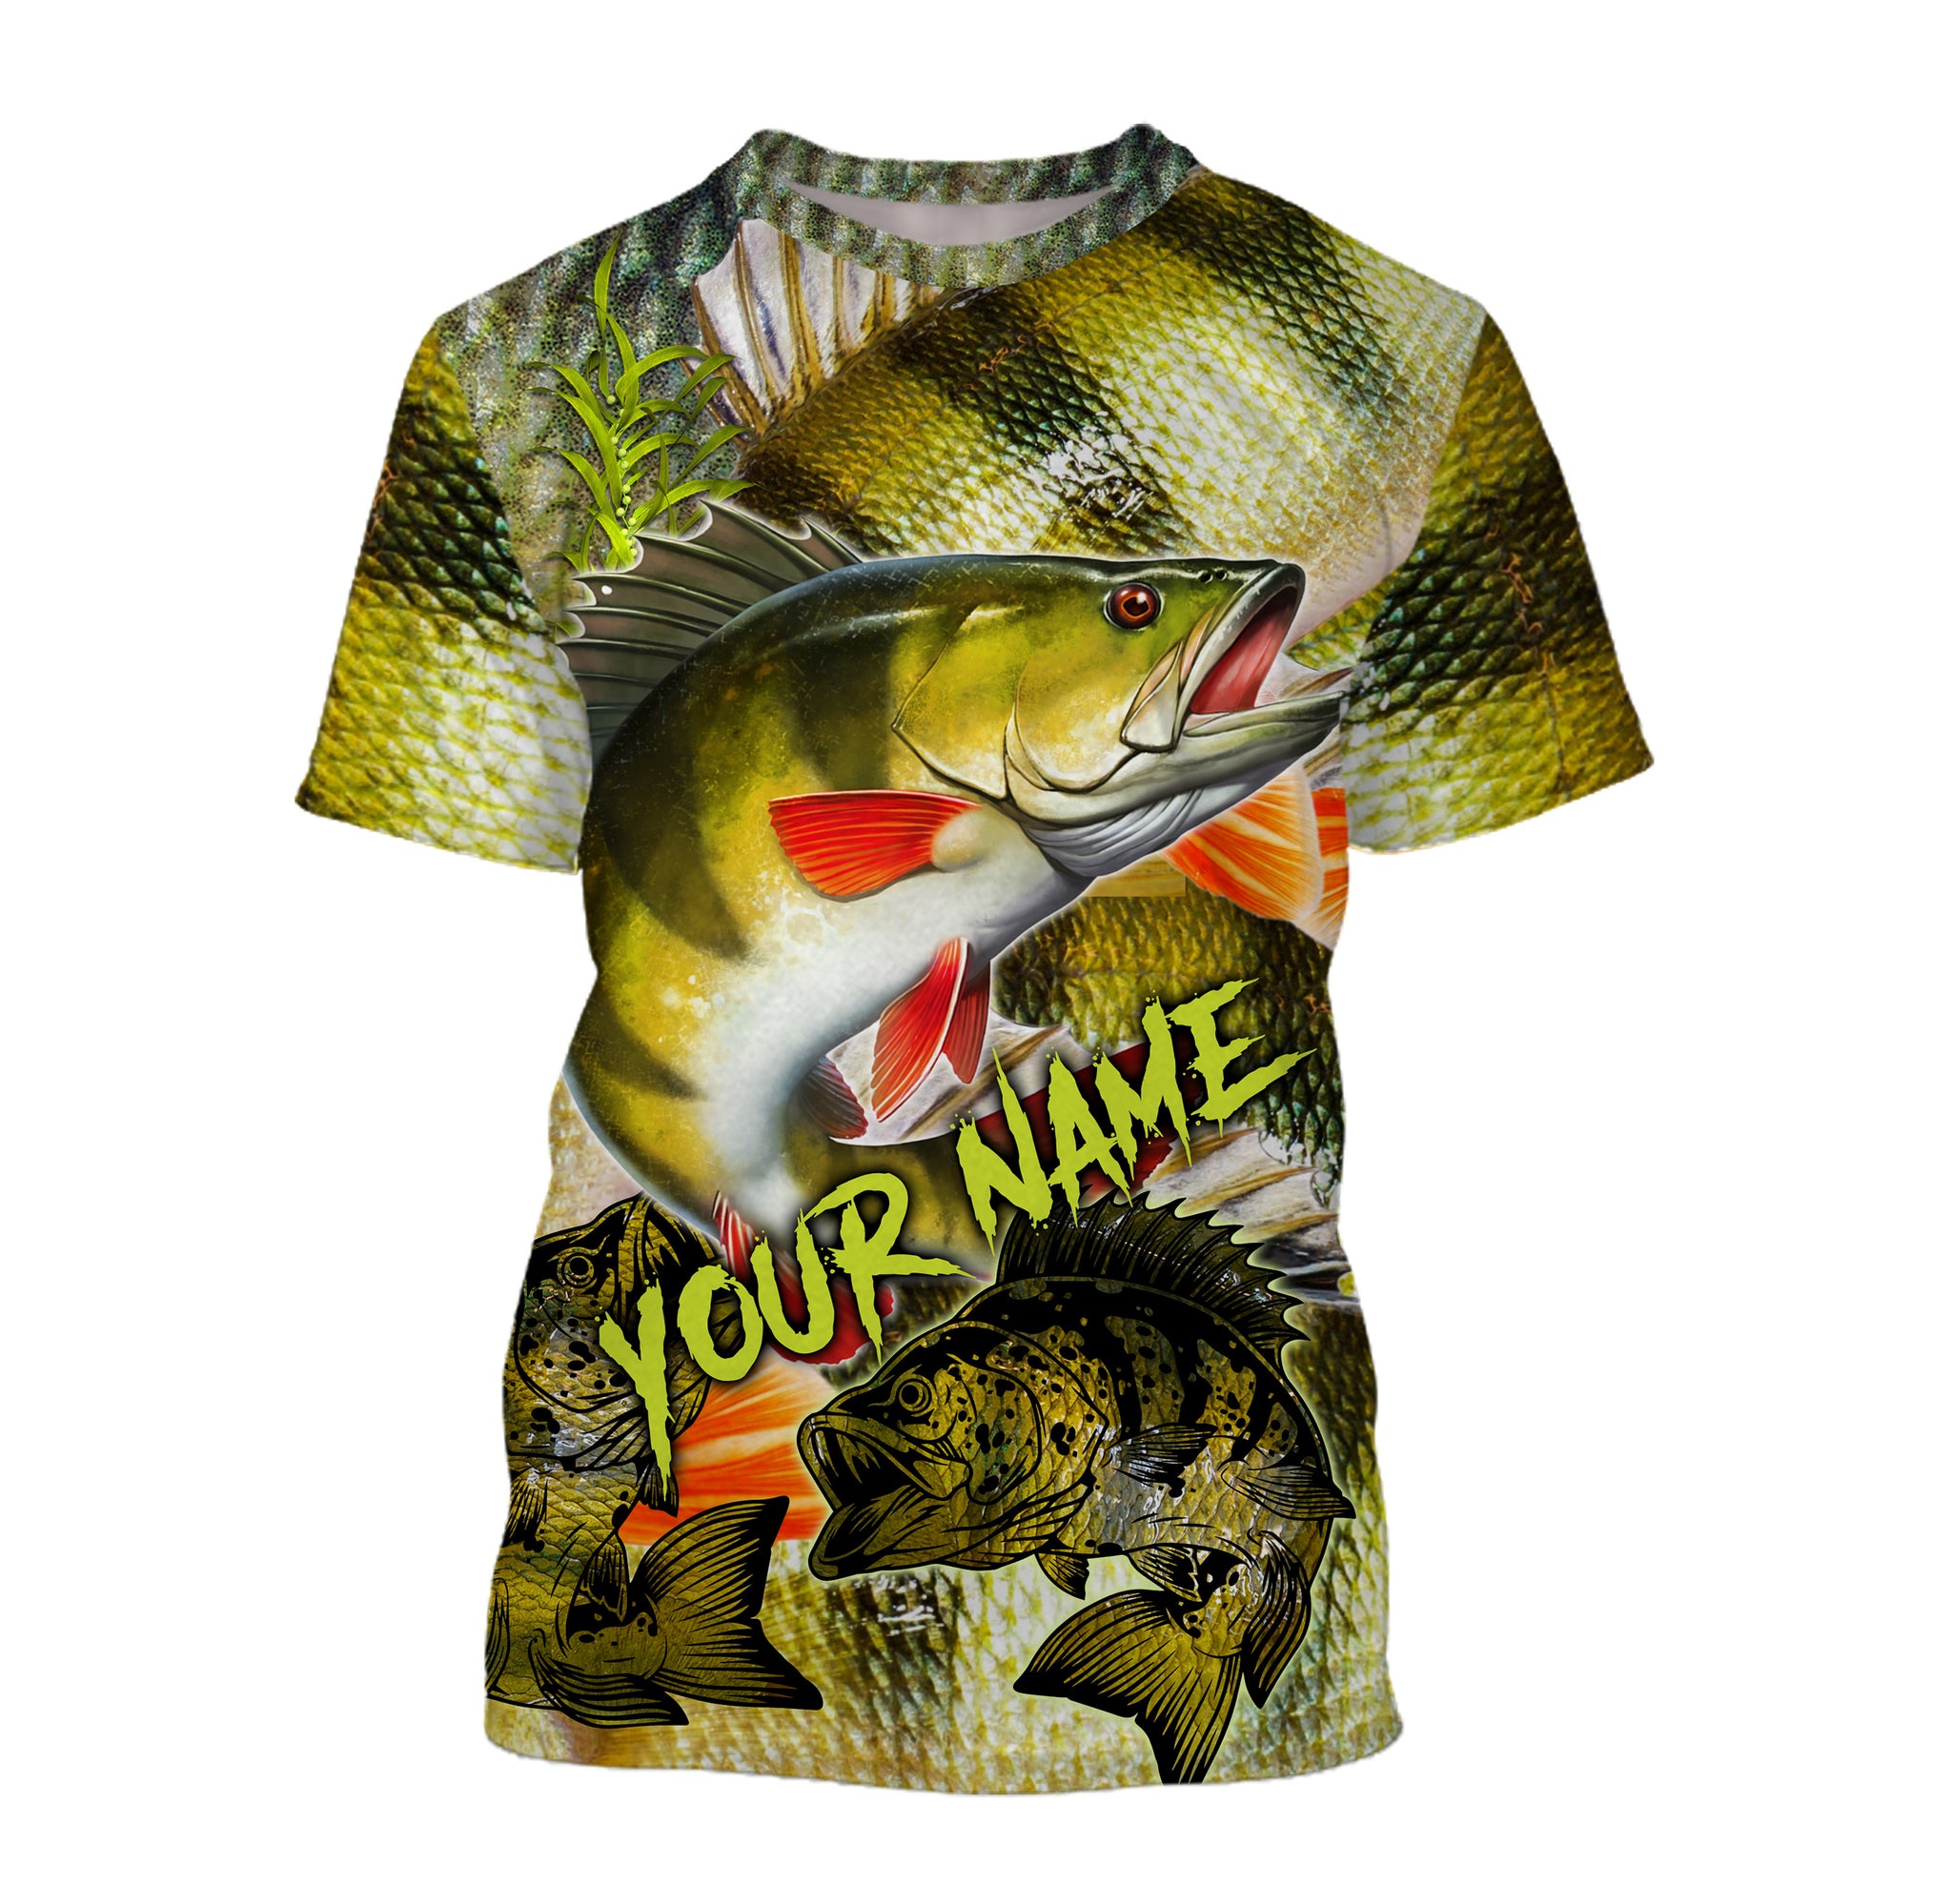 Custom Perch Fishing Tournament Fishing Shirts, Perch Long Sleeve Uv P